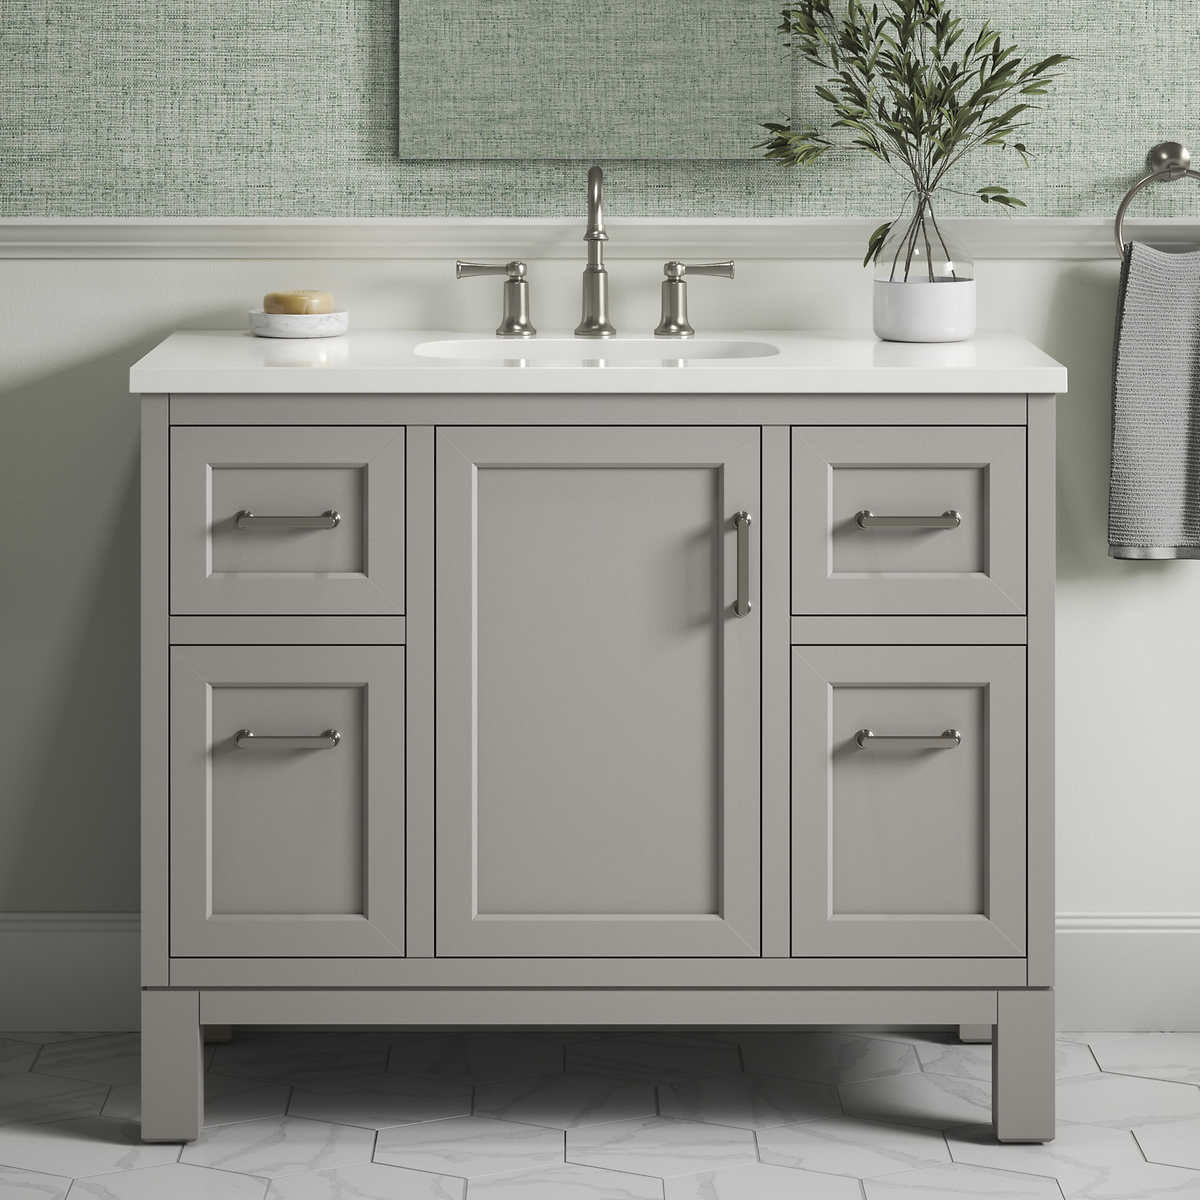 NEW - Costco - Kohler Tellin 42" Bath Vanity in Gray - Retail $1399